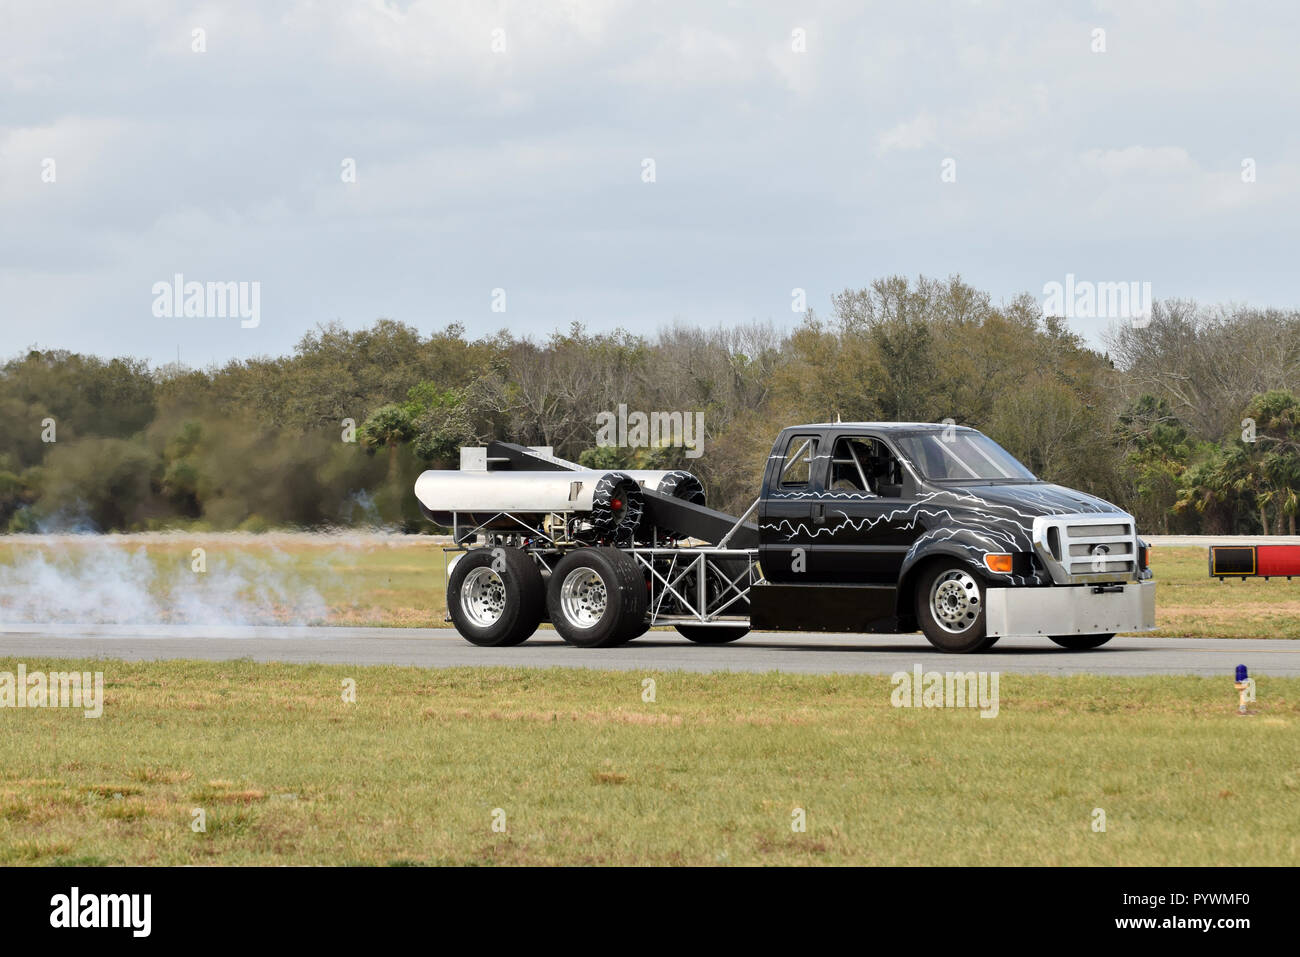 Jet engine powered truck prepares for stunt Stock Photo